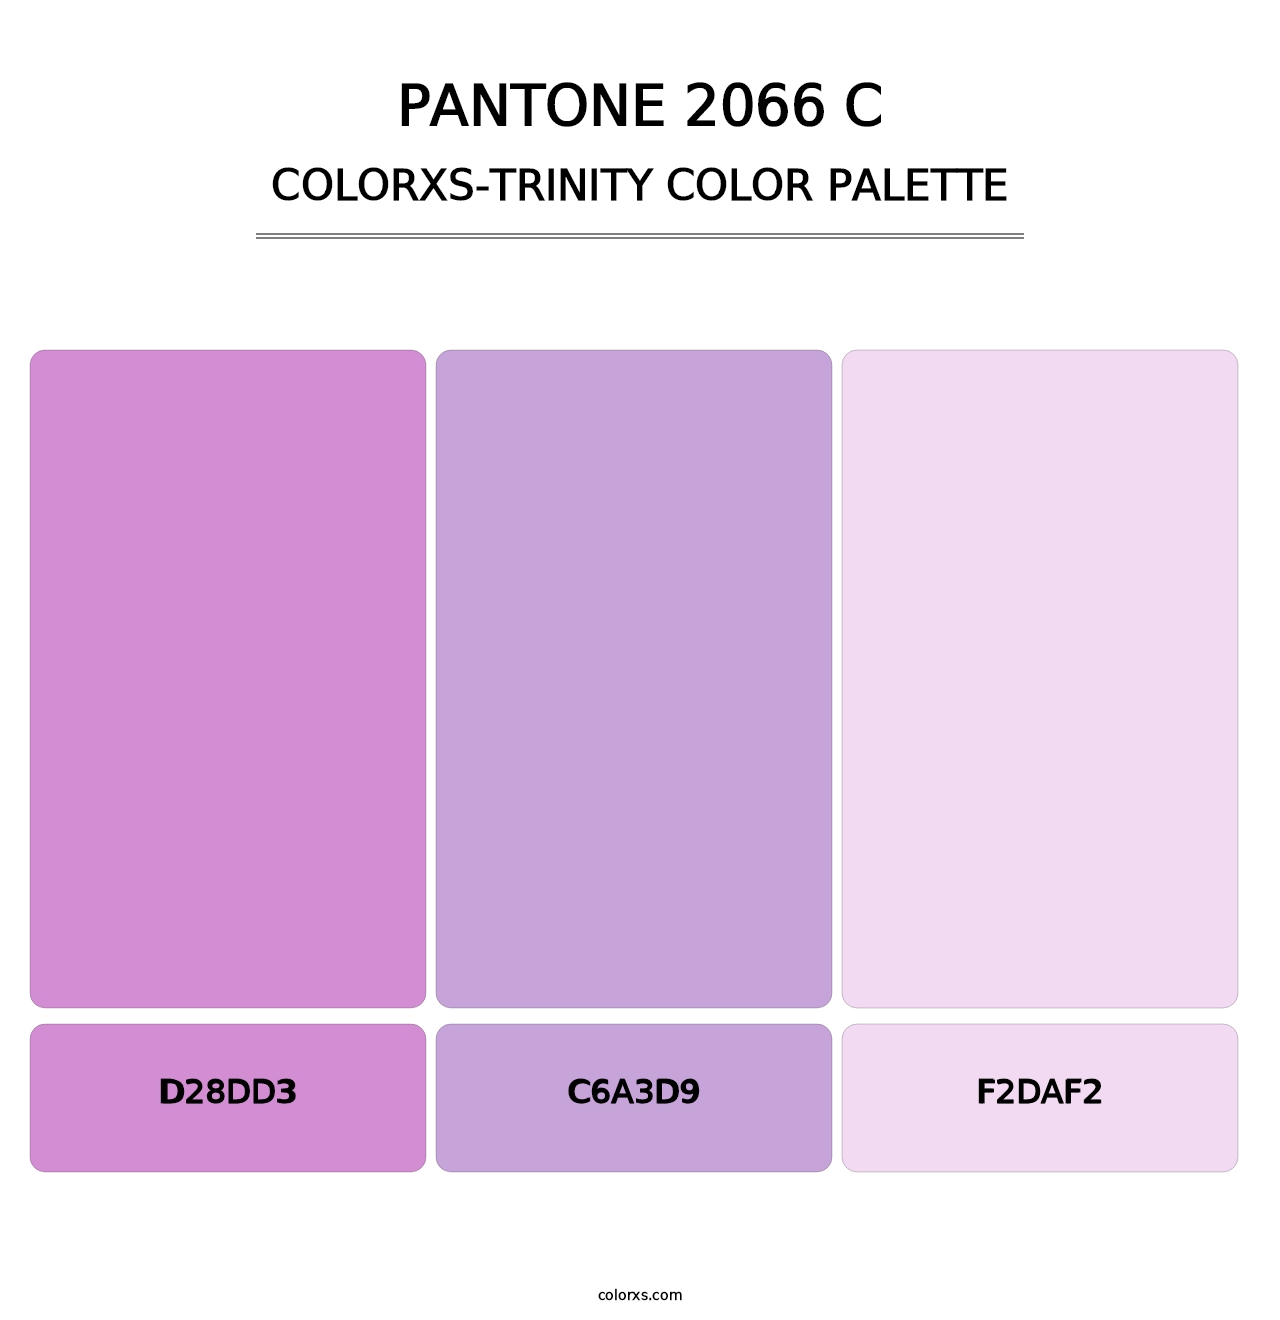 PANTONE 2066 C - Colorxs Trinity Palette